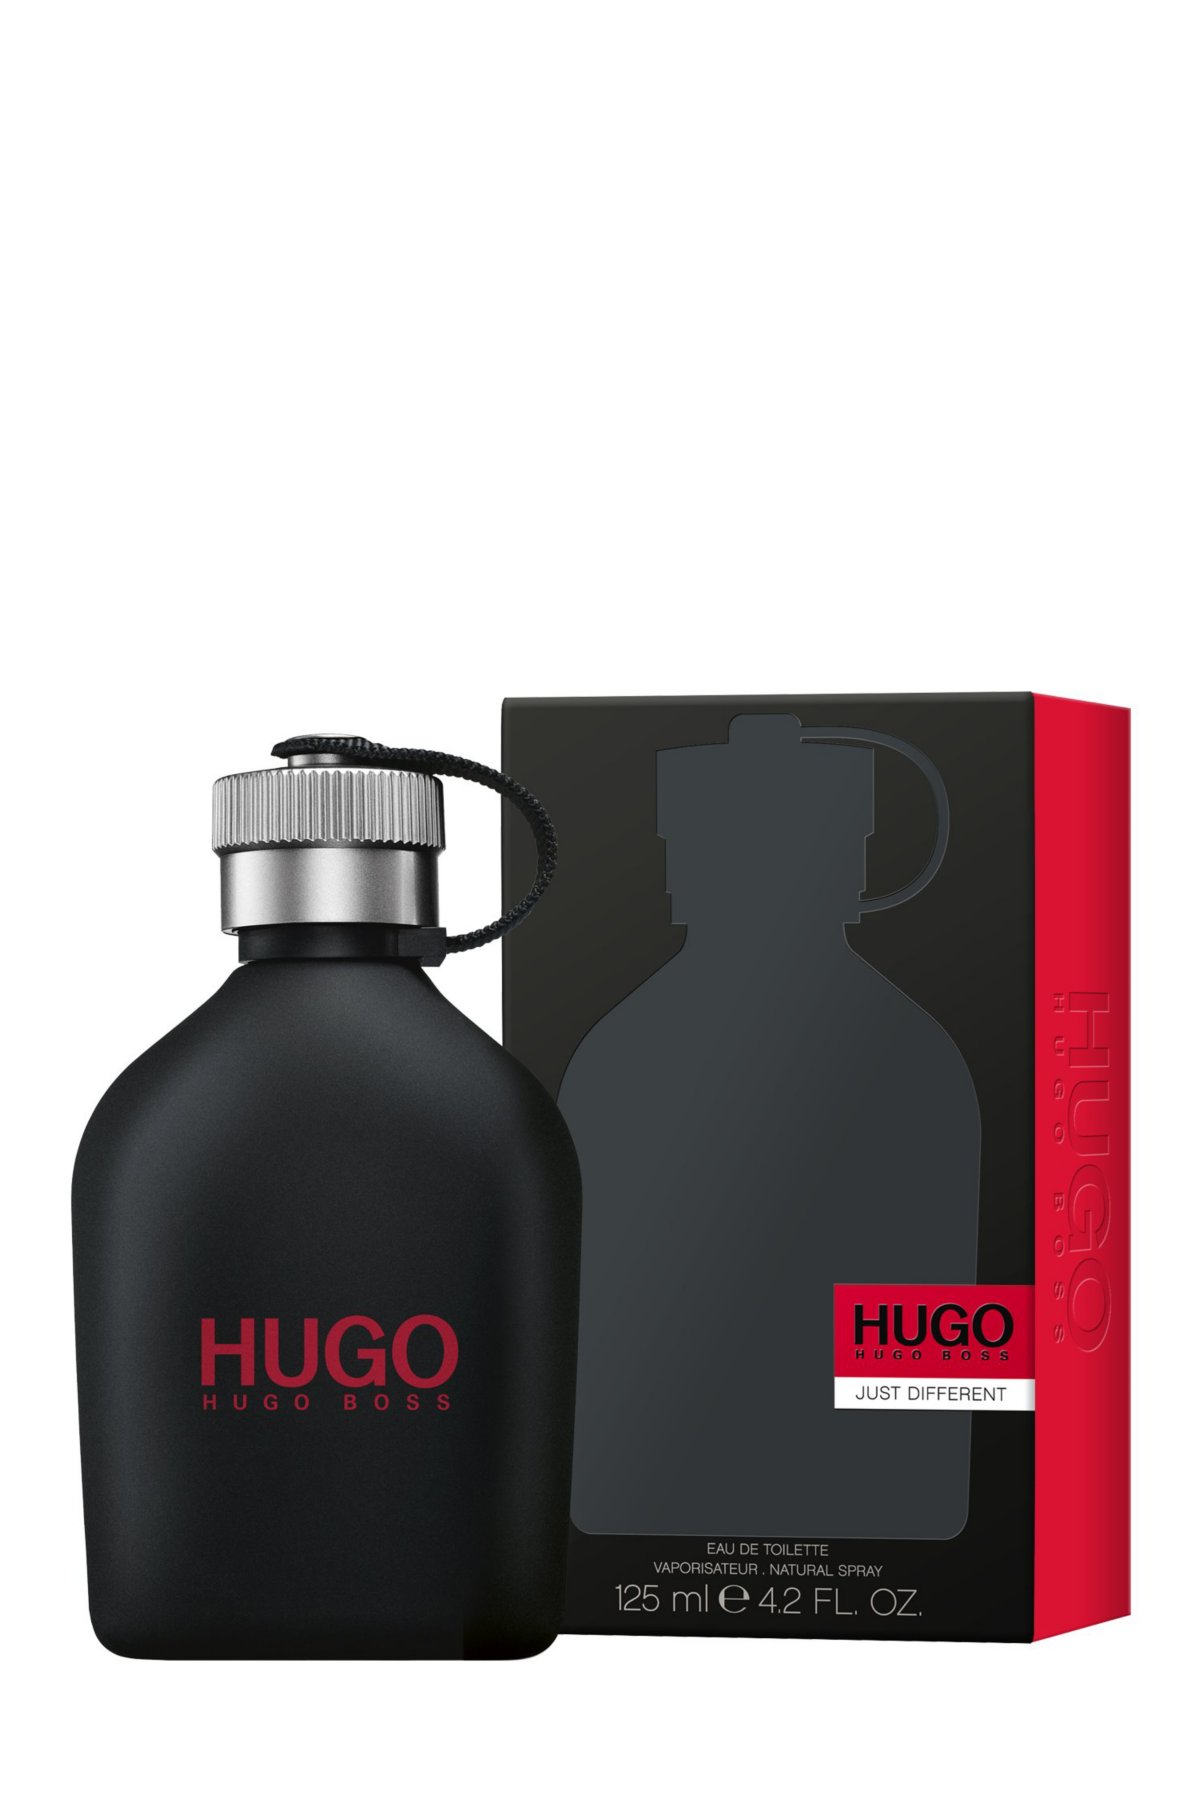 HUGO - fl. (125 mL) Eau Toilette | HUGO Just Different